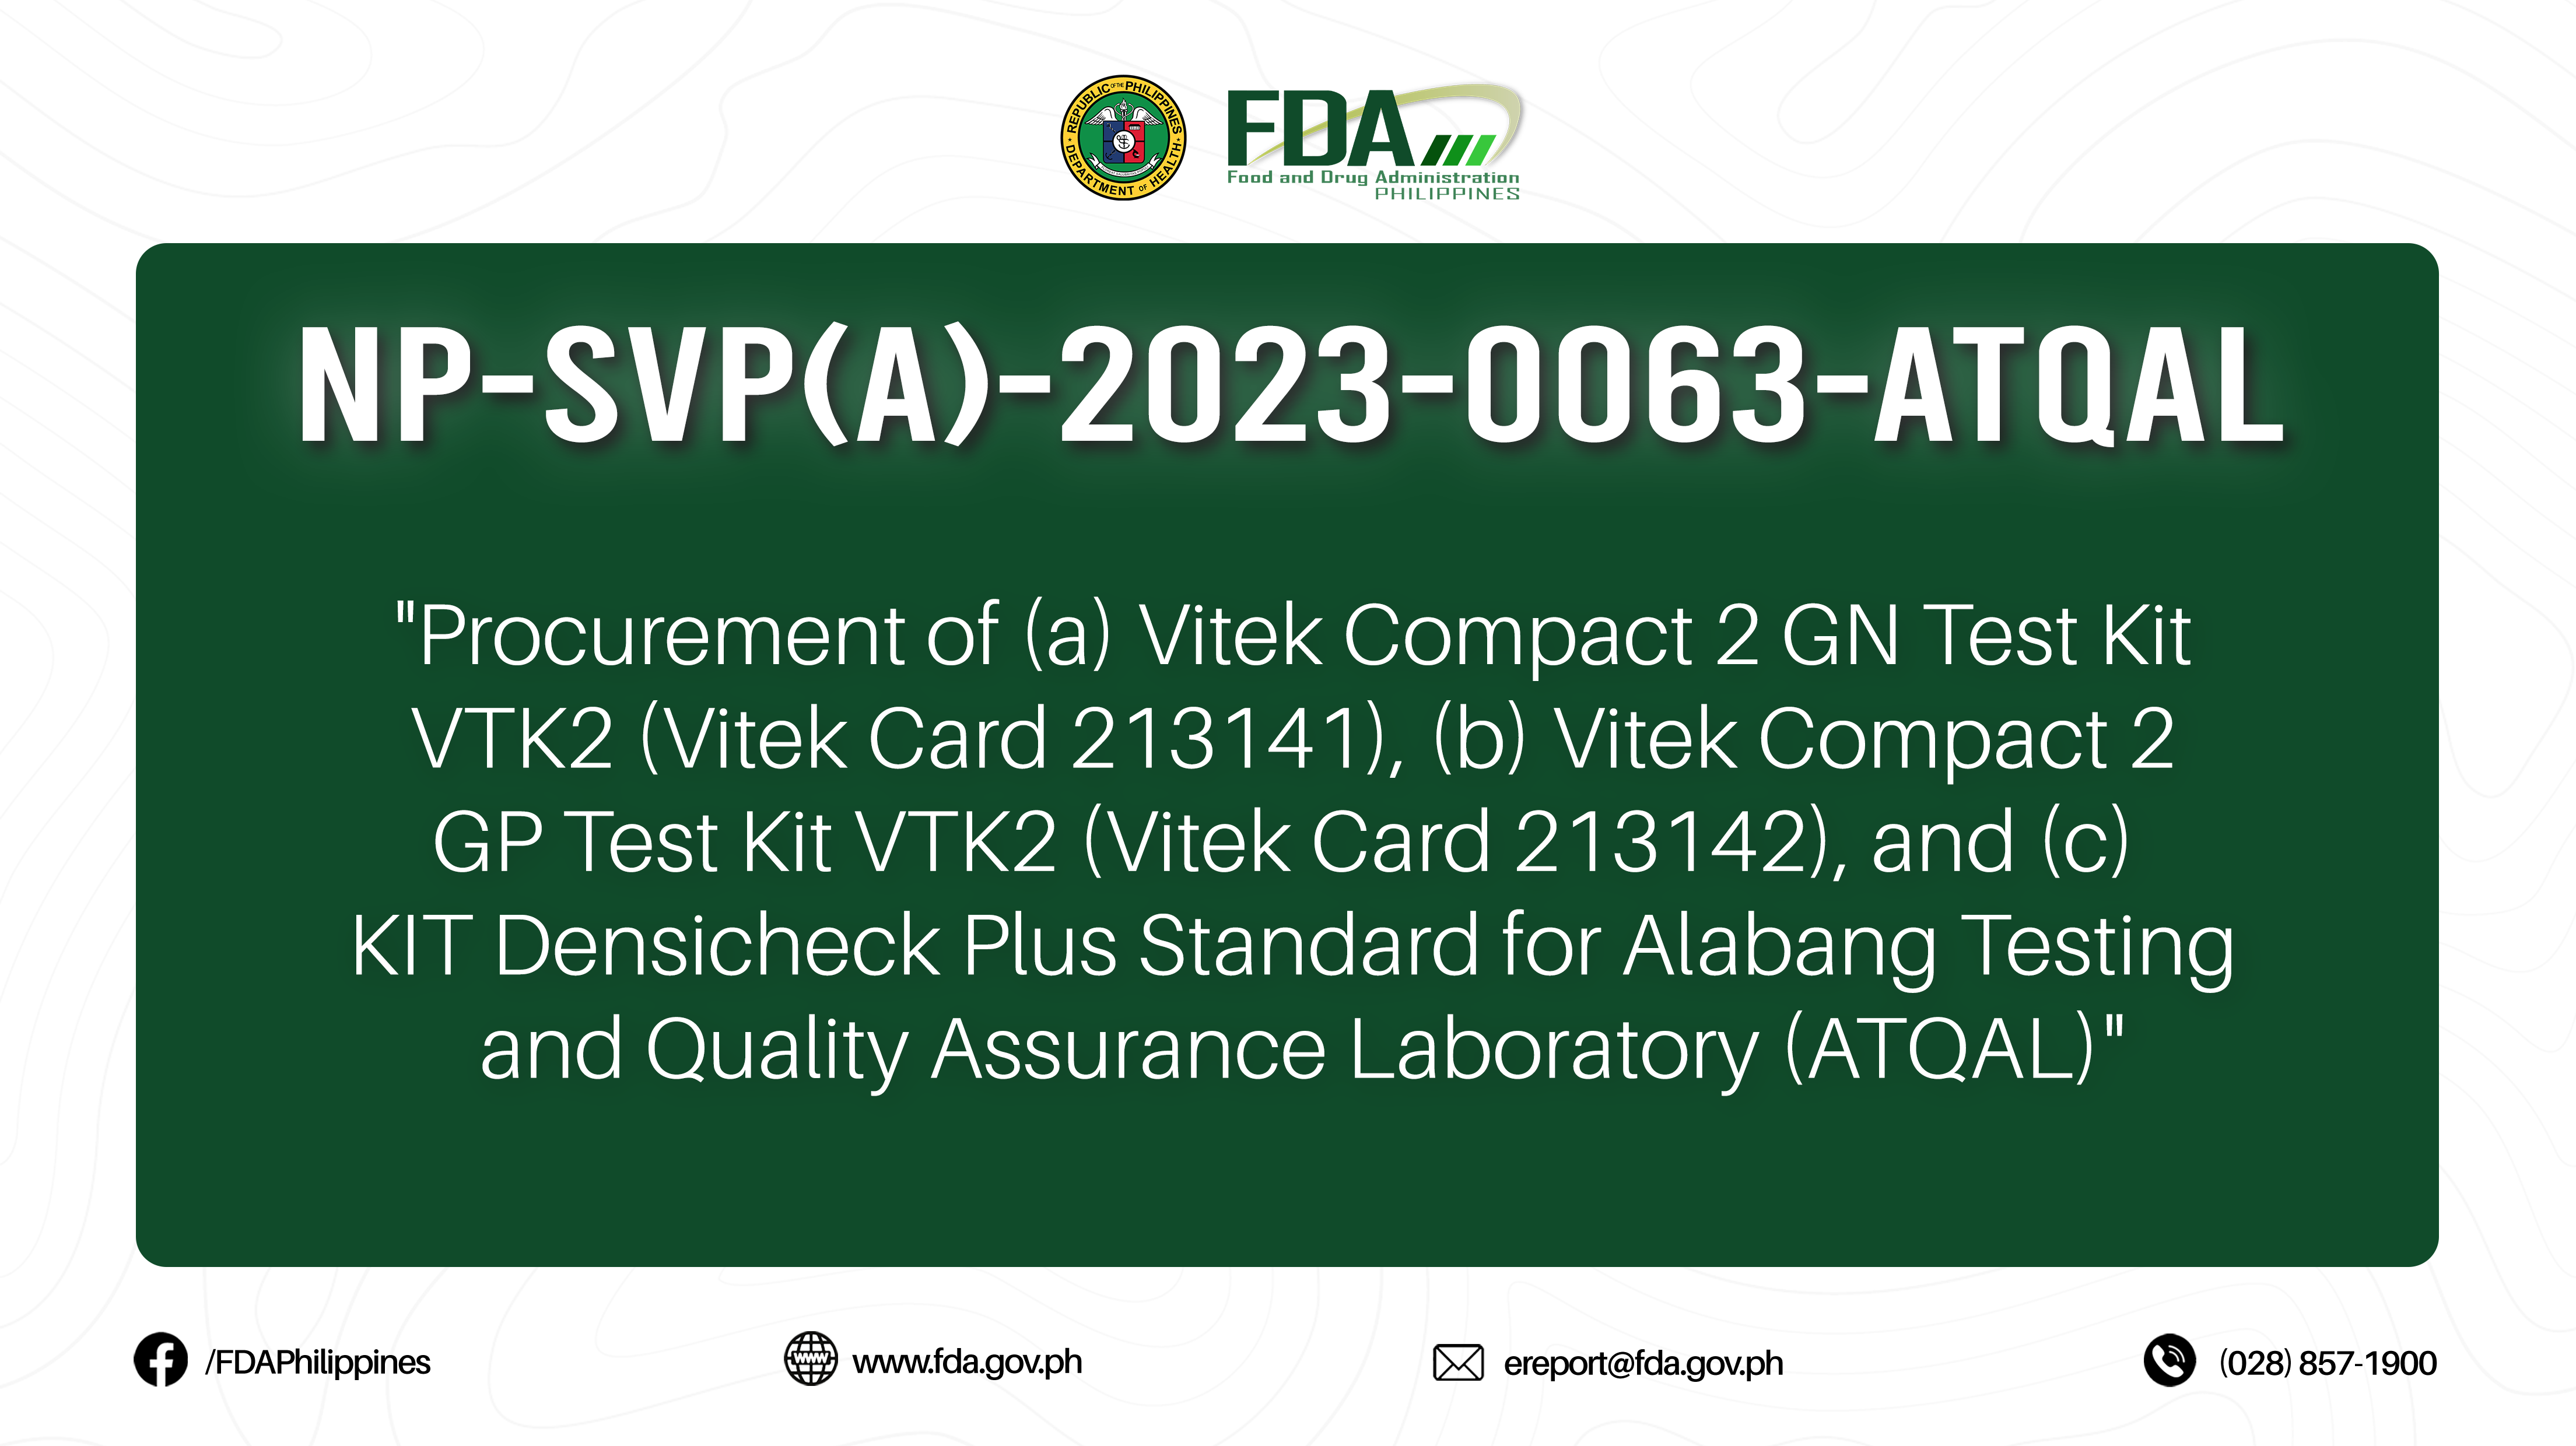 NP-SVP(A)-2023-0063-ATQAL || “Procurement of (a) Vitek Compact 2 GN Test Kit  VTK2 (Vitek Card 213141), (b) Vitek Compact 2  GP Test Kit VTK2 (Vitek Card 213142), and (c)  KIT Densicheck Plus Standard for Alabang Testing  and Quality Assurance Laboratory (ATQAL)”